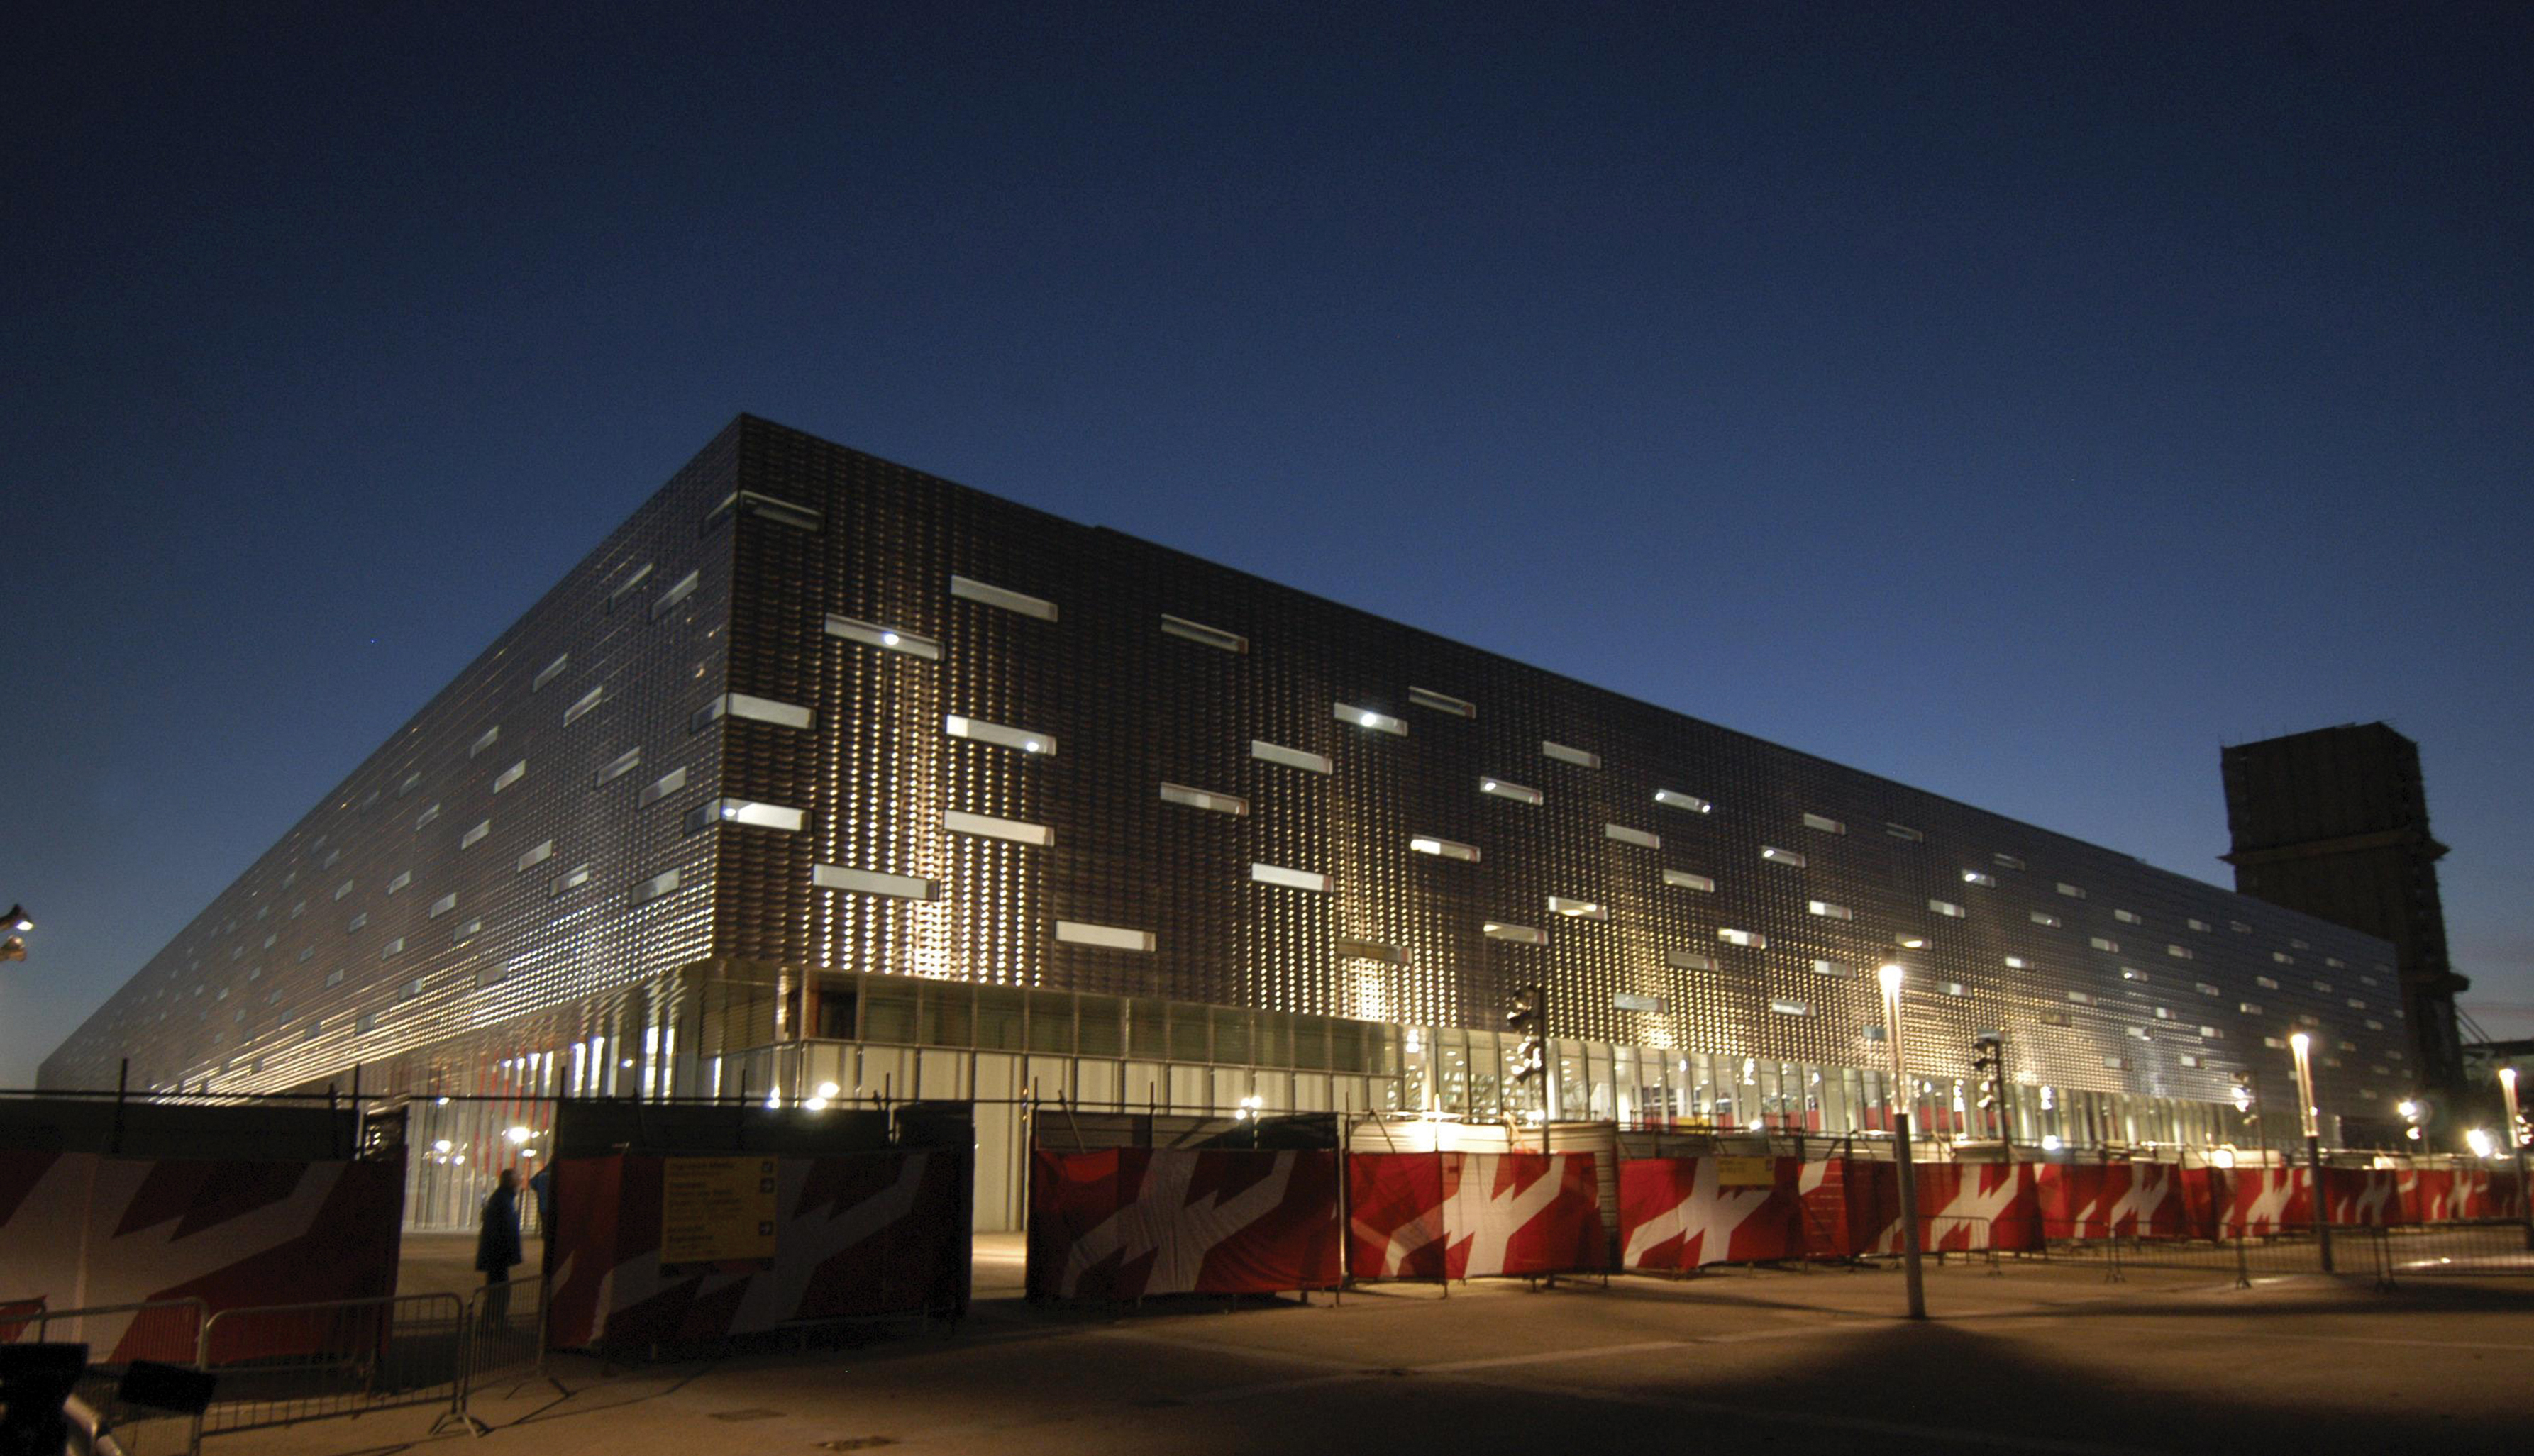 Palasport Olimpico (PalAlpitour): a Torino l'arena coperta più grande d'Italia